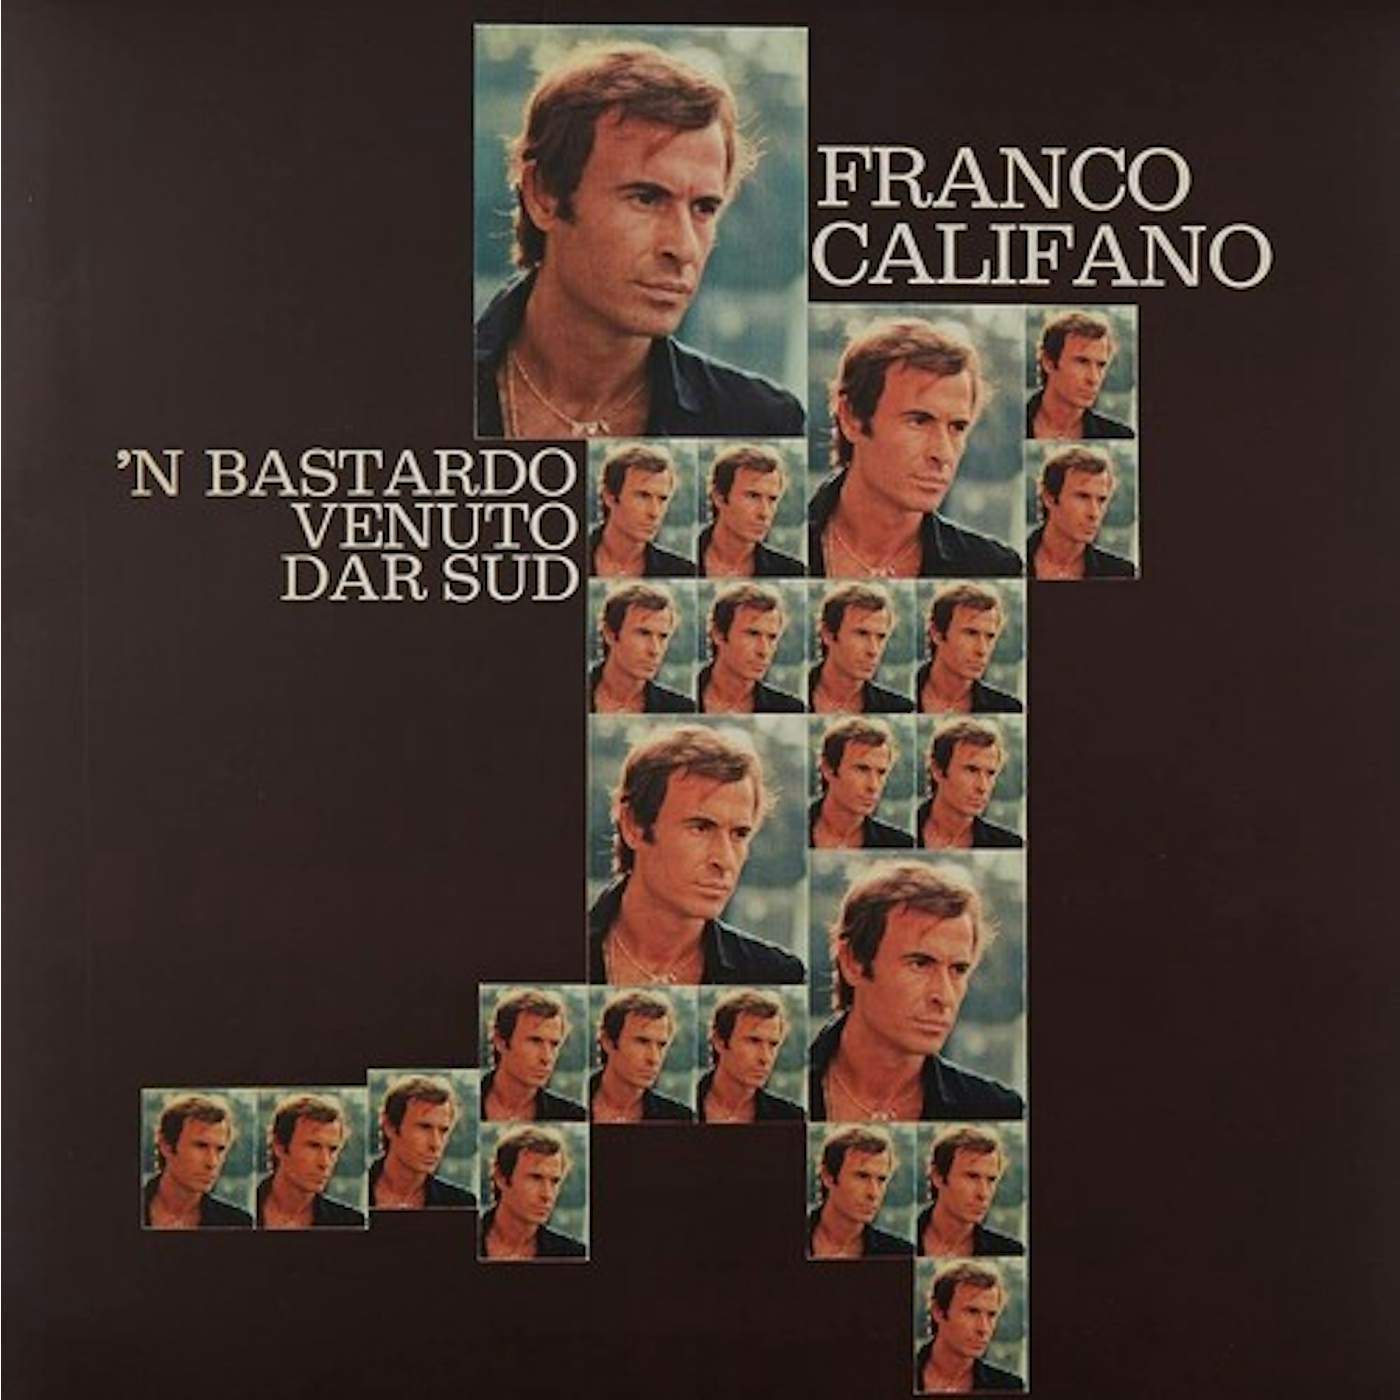 Franco Califano N BASTARDO VENUTO DAR SUD Vinyl Record